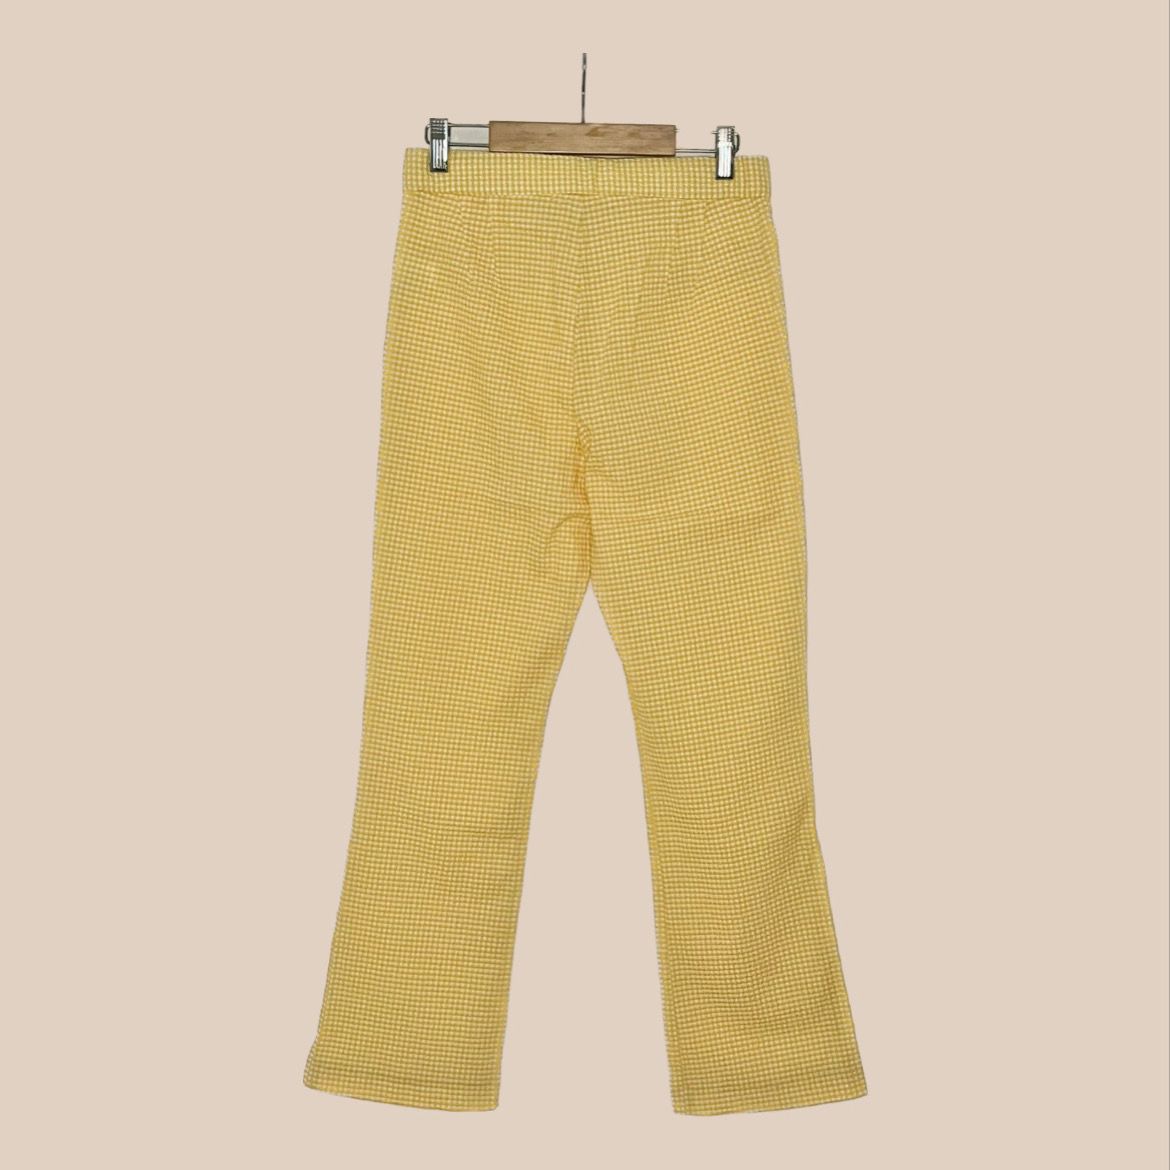 Square yellow pants